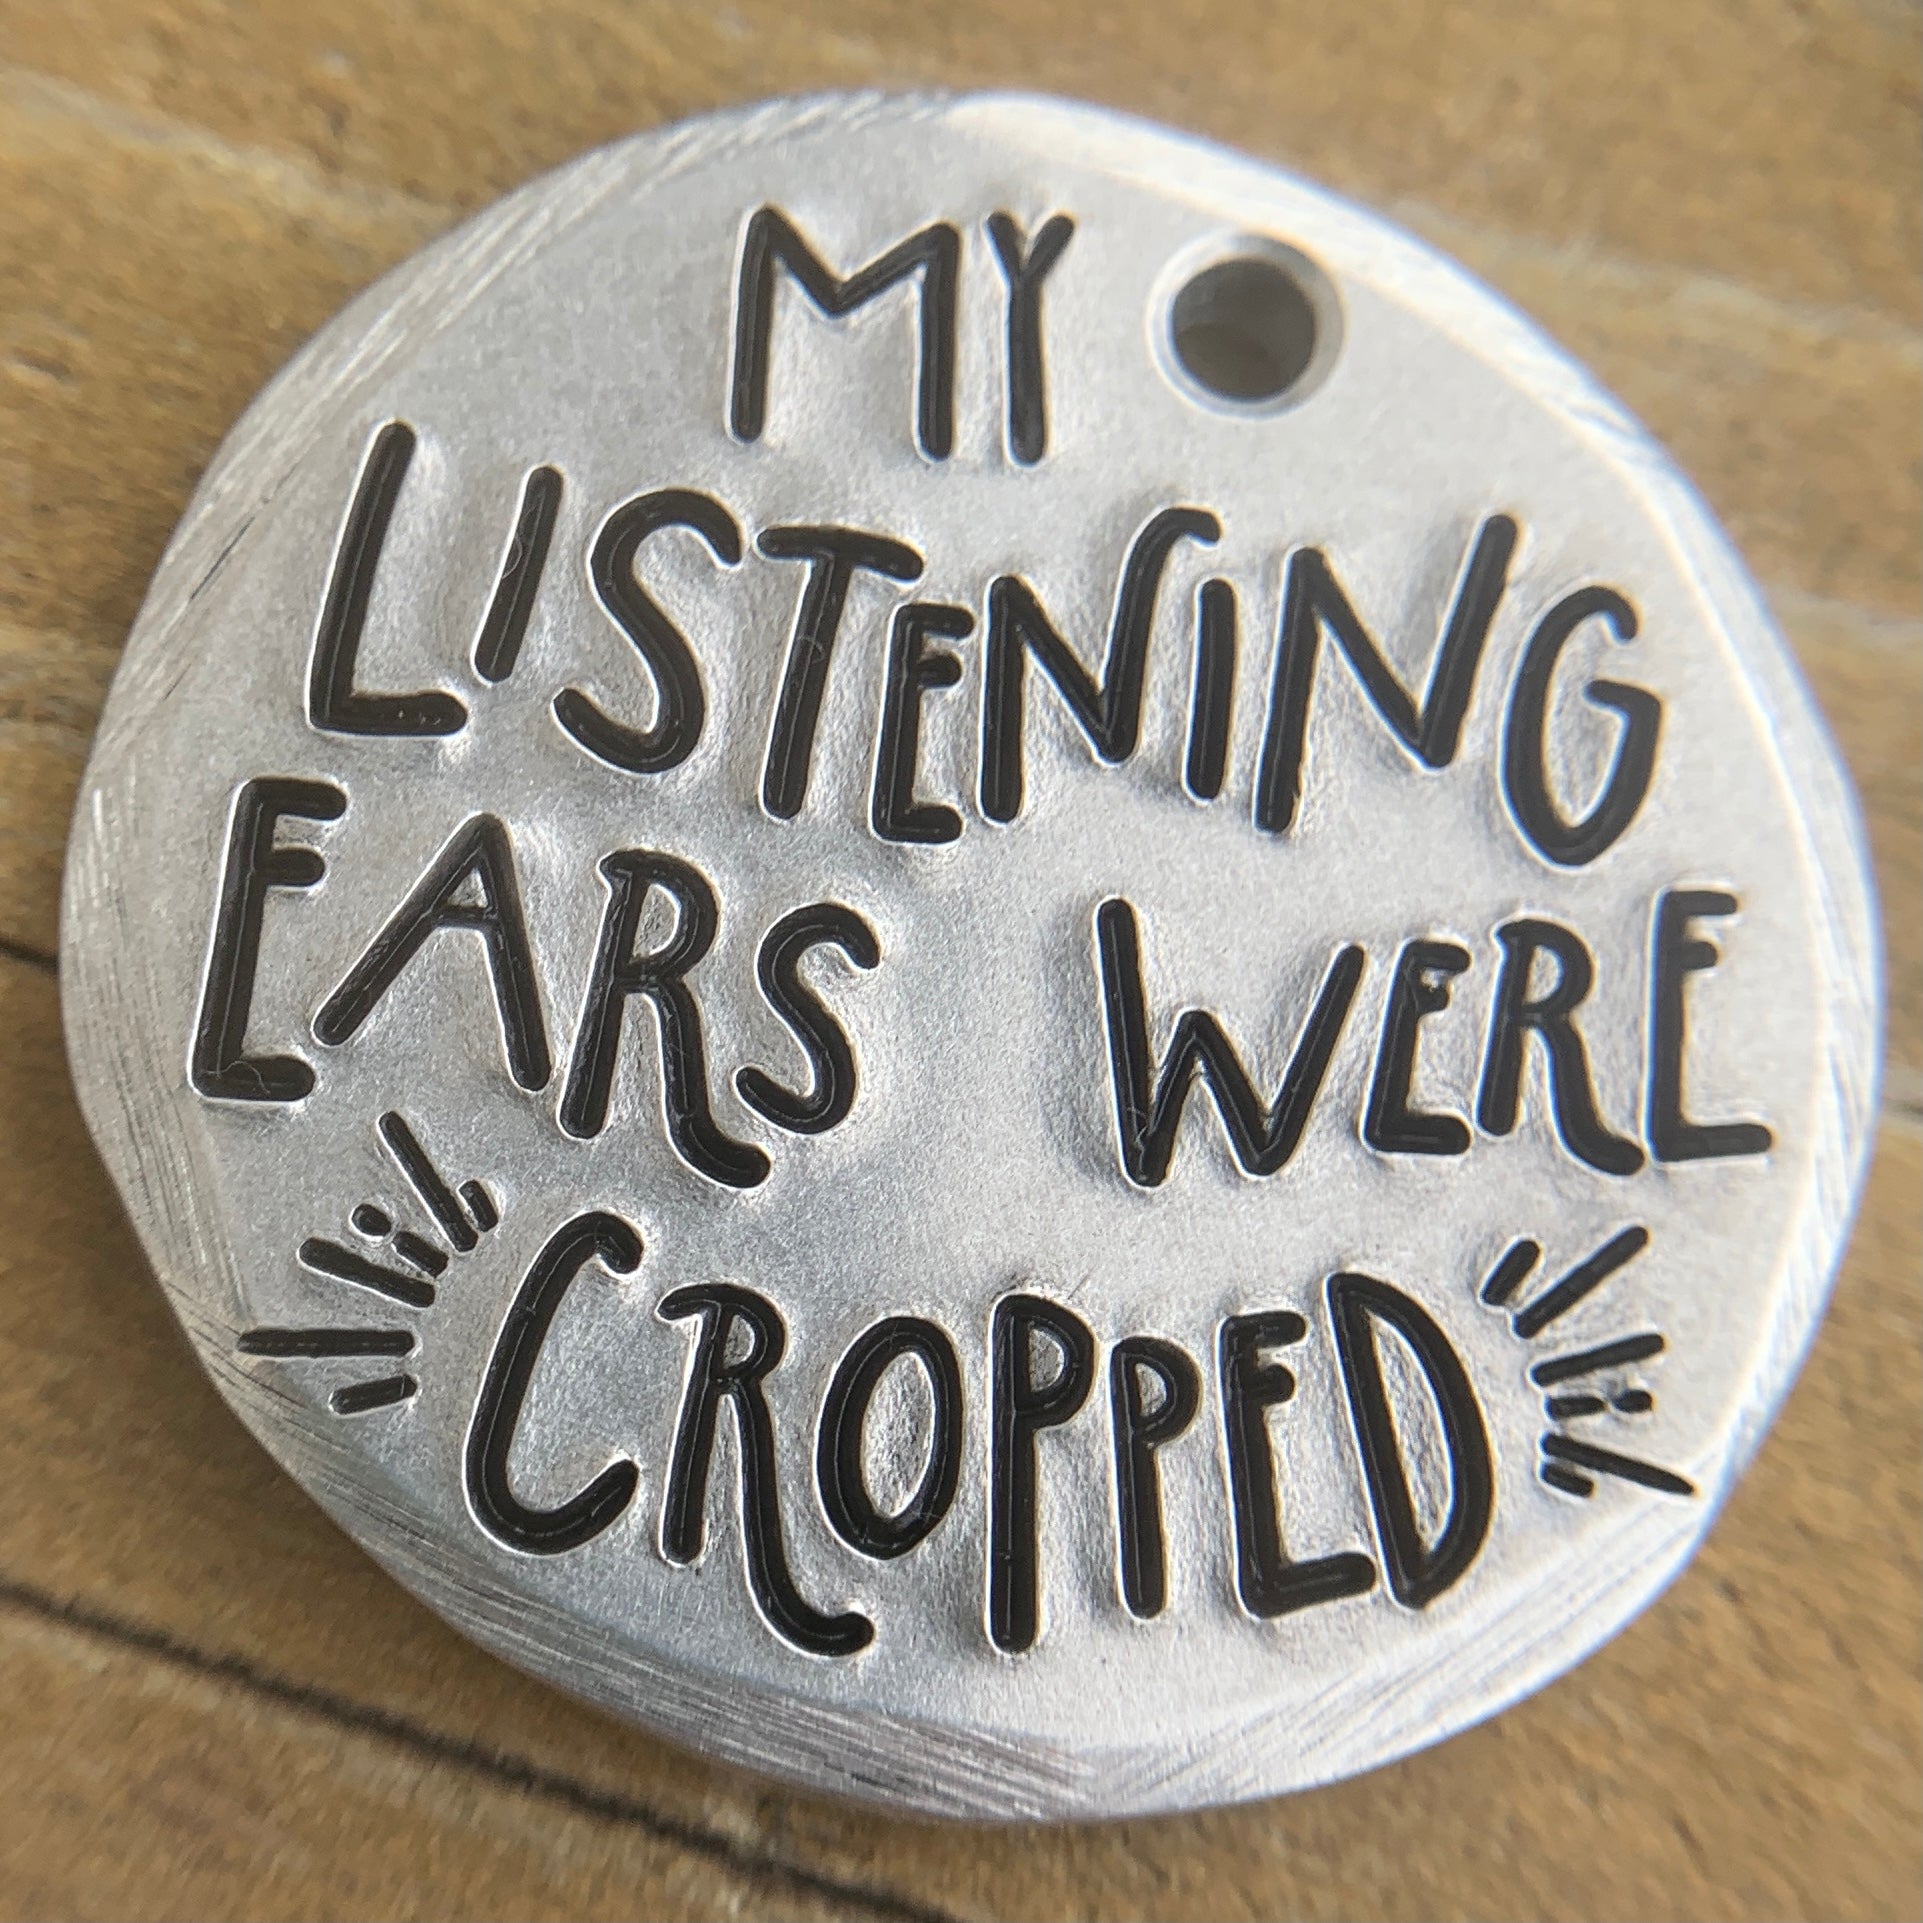 mto - listening ears